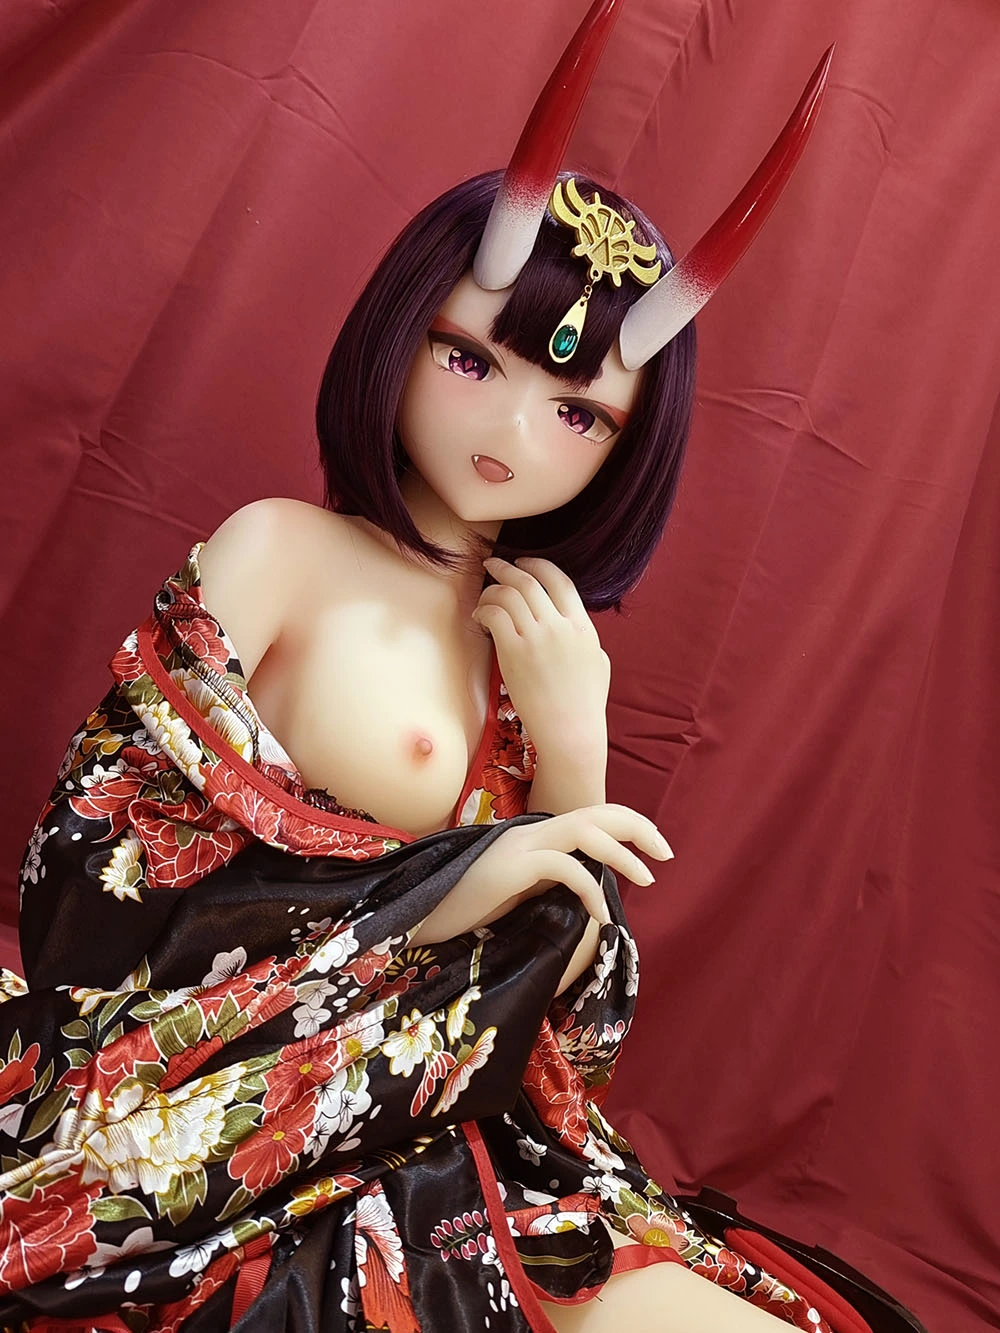 Fate/Grand Order sex doll